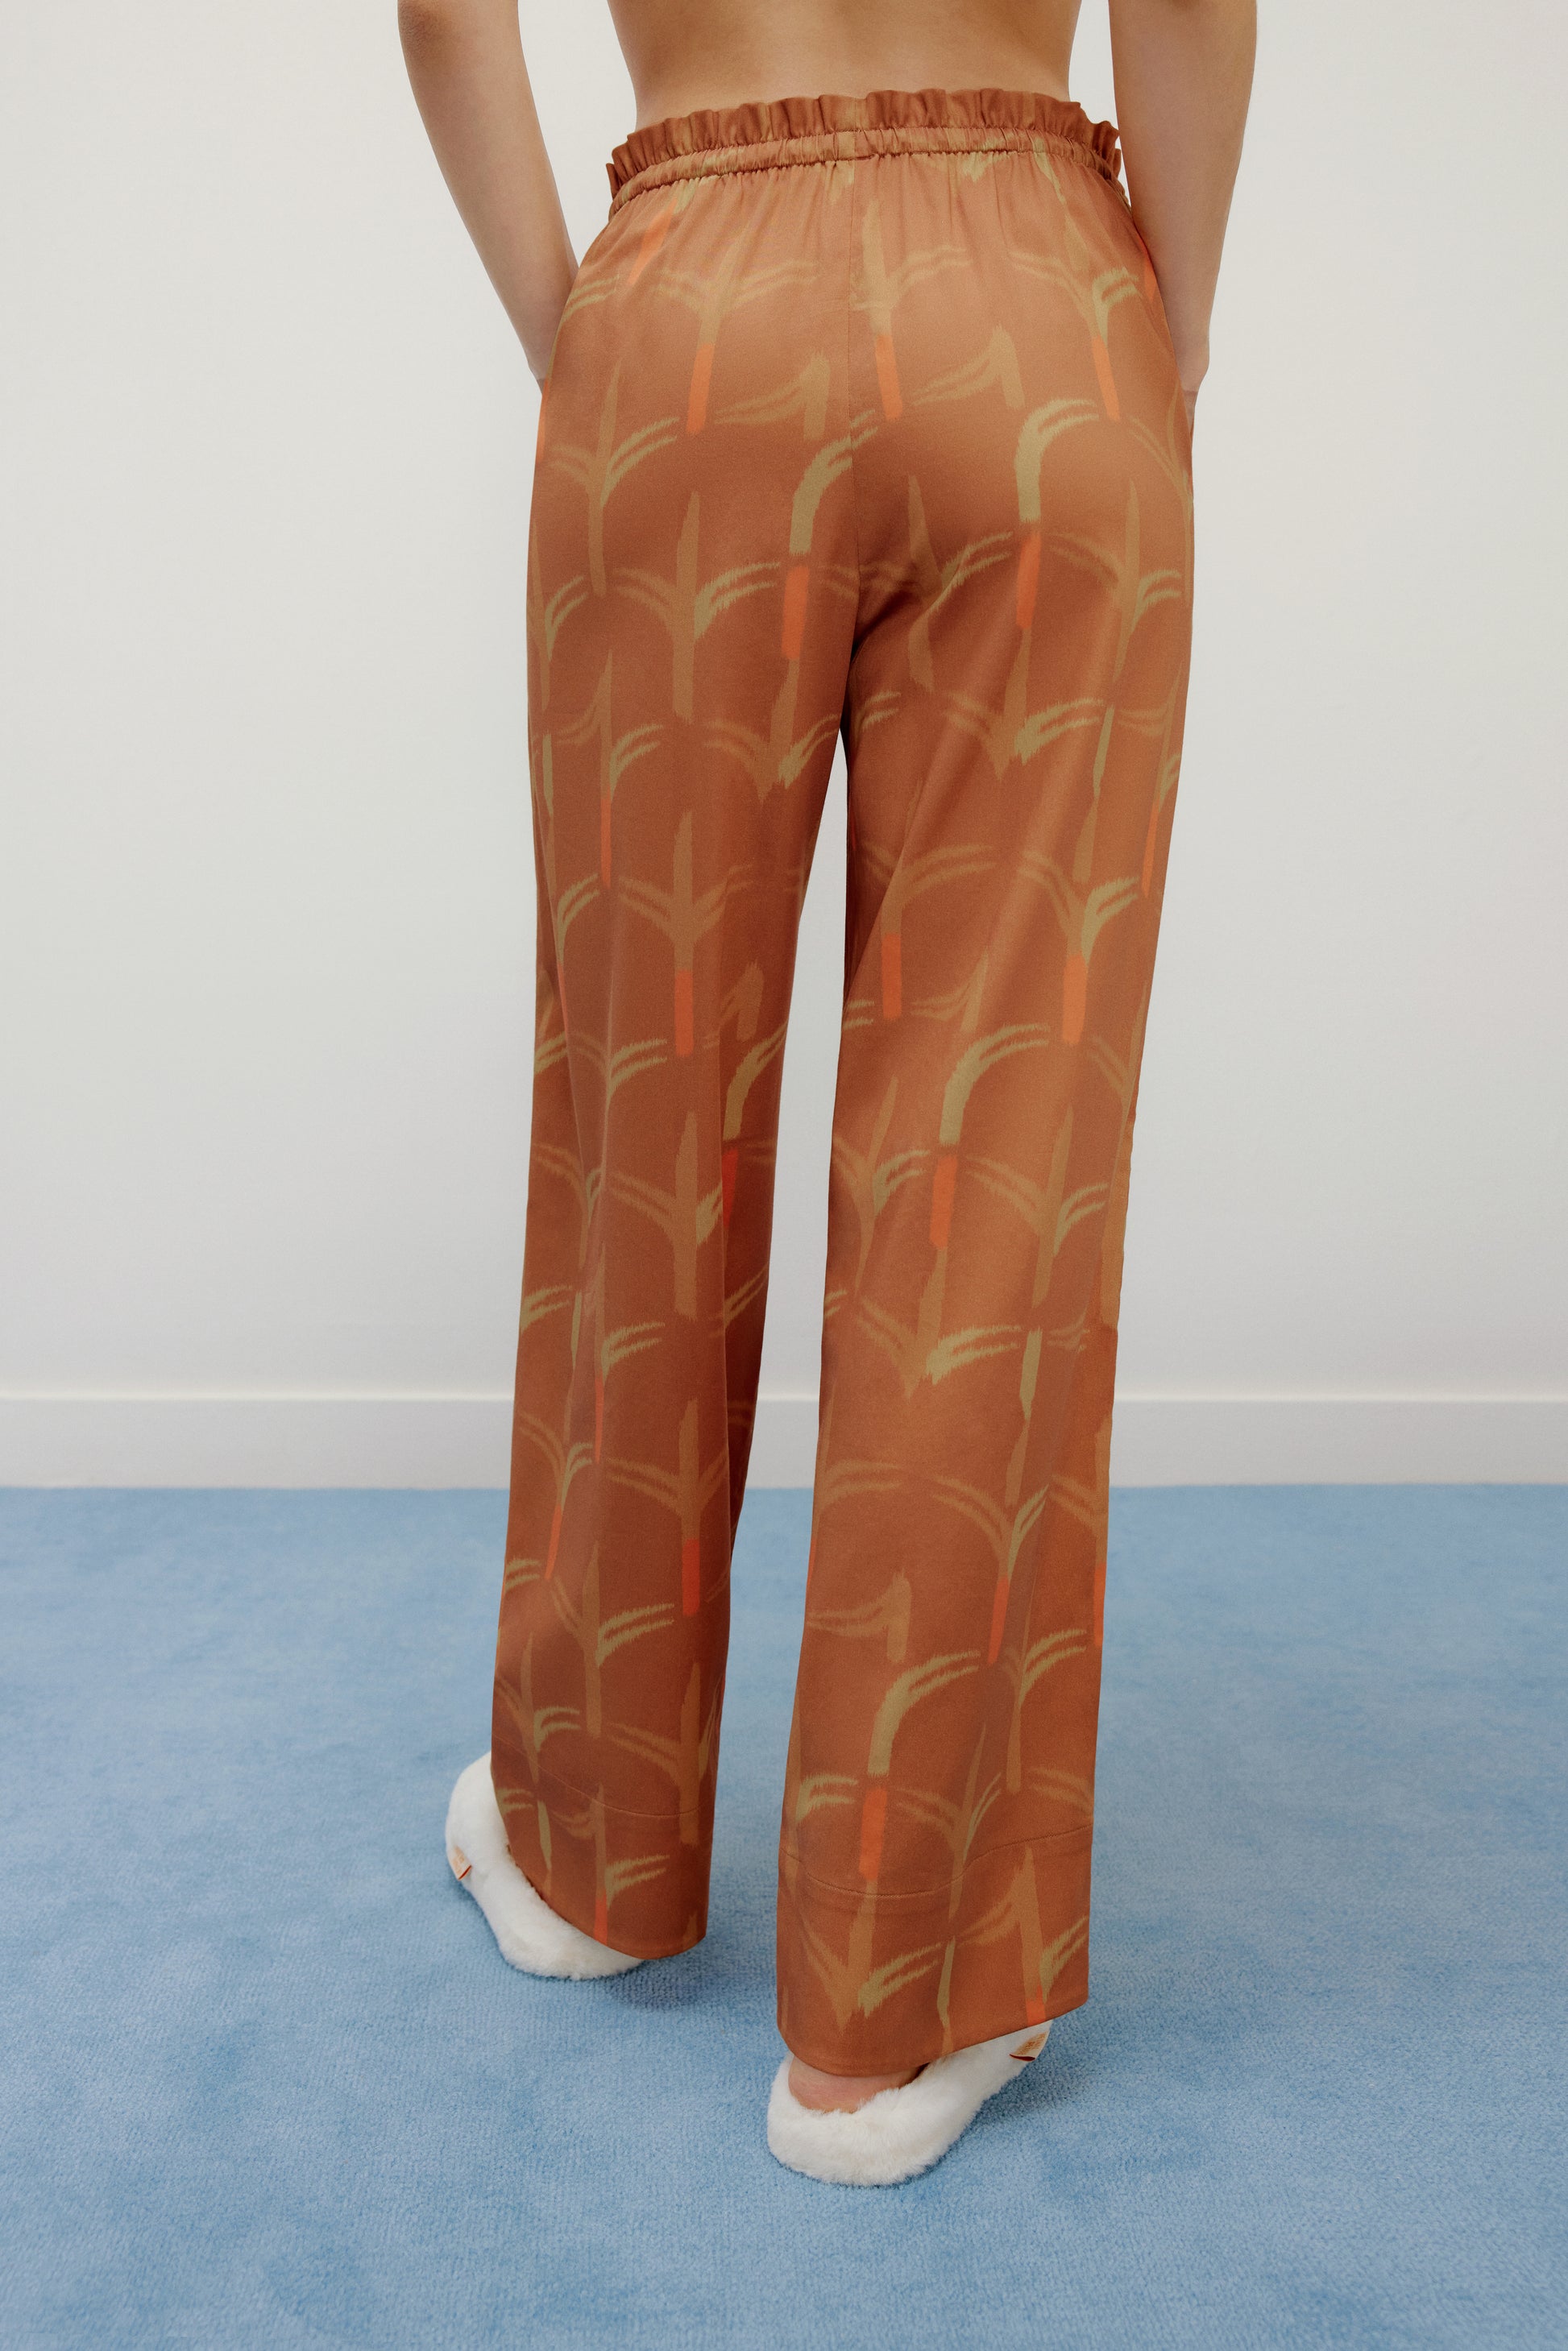 the back of model wearing brown pajama pants